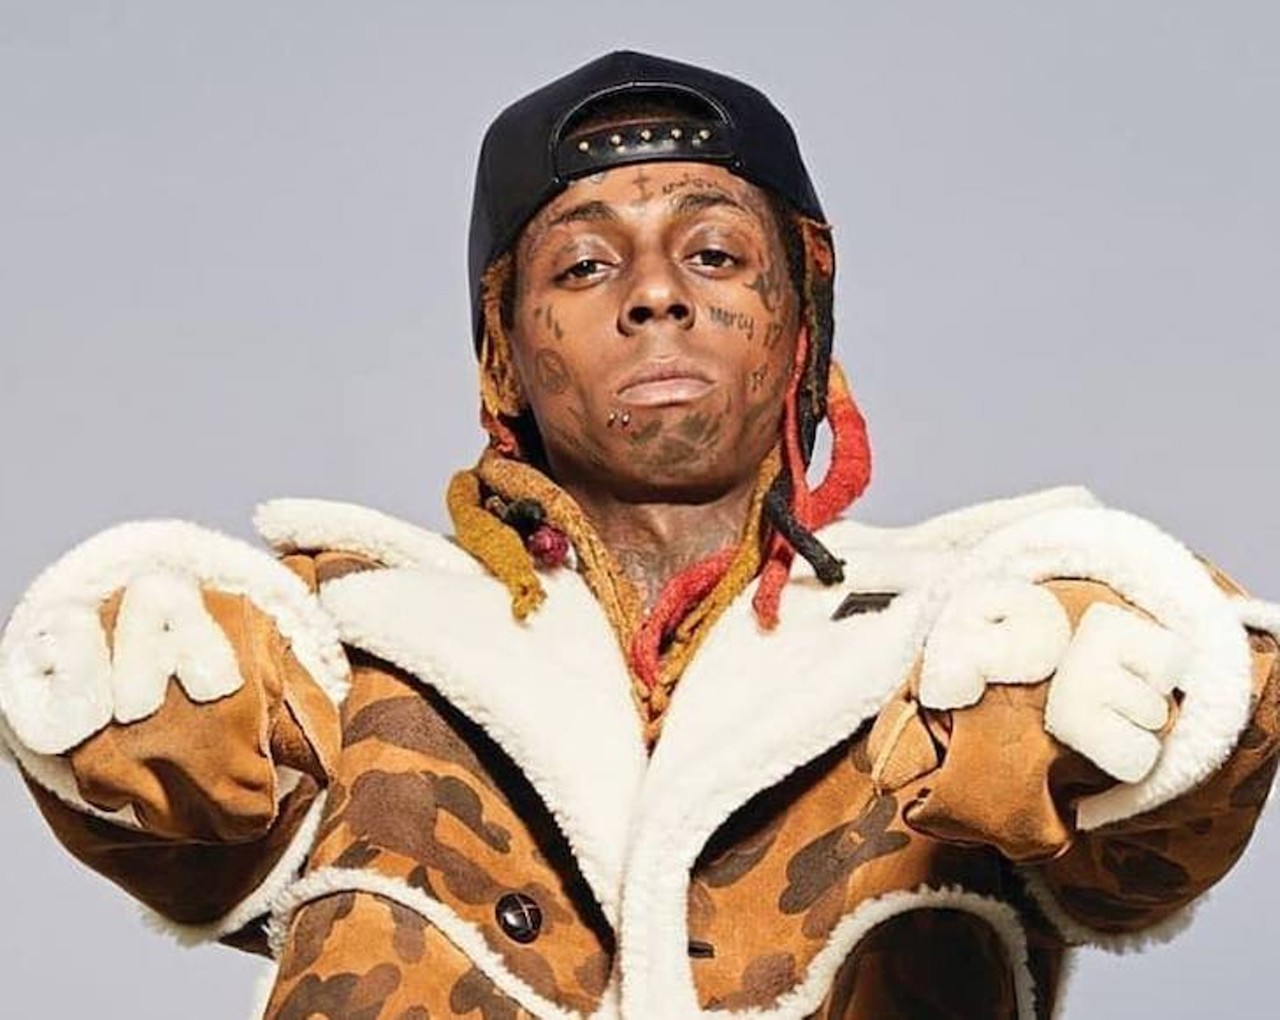 Rapper Lil Wayne
Photo via Lil Wayne/Facebook